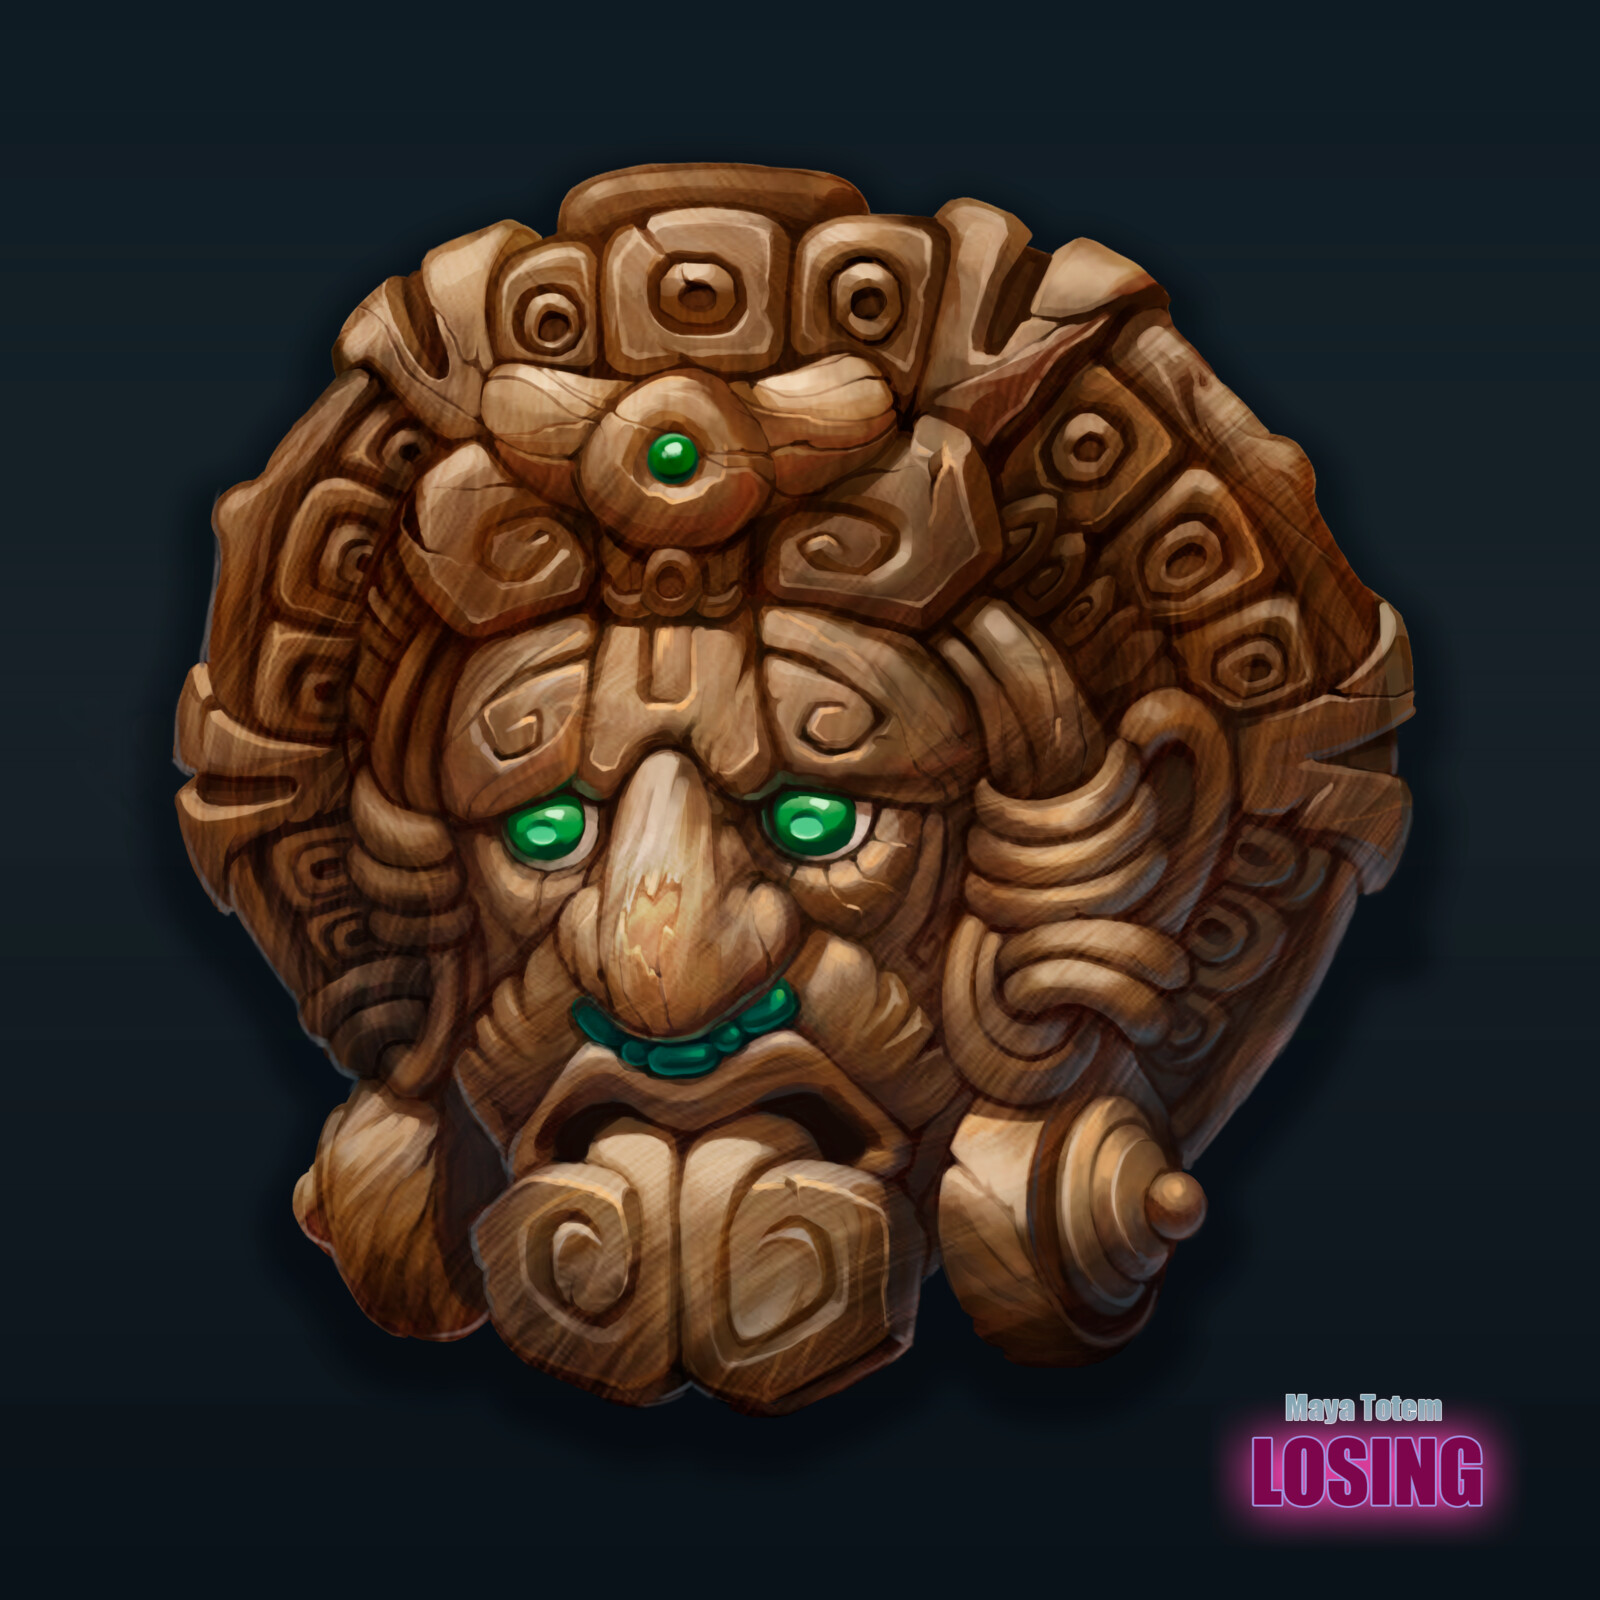 Maya Totem Losing design icon